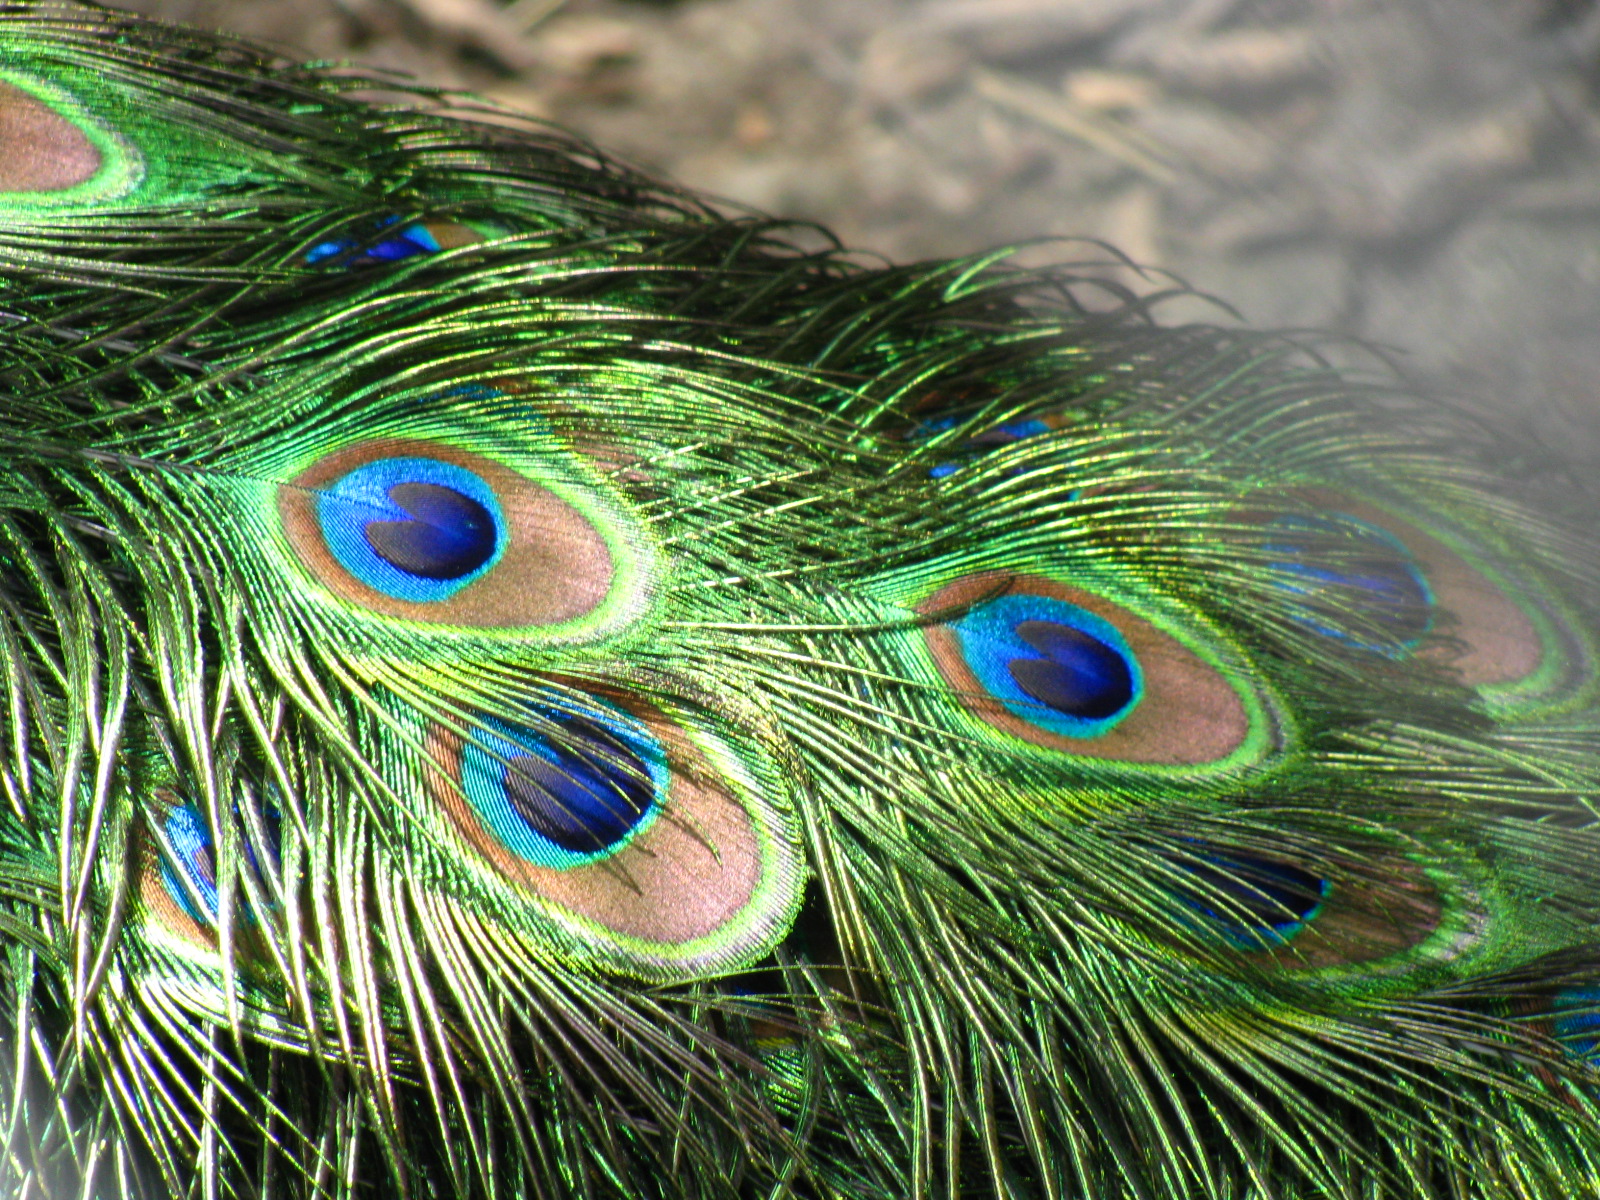 FilePeacock feathers closeup.jpg Wikipedia